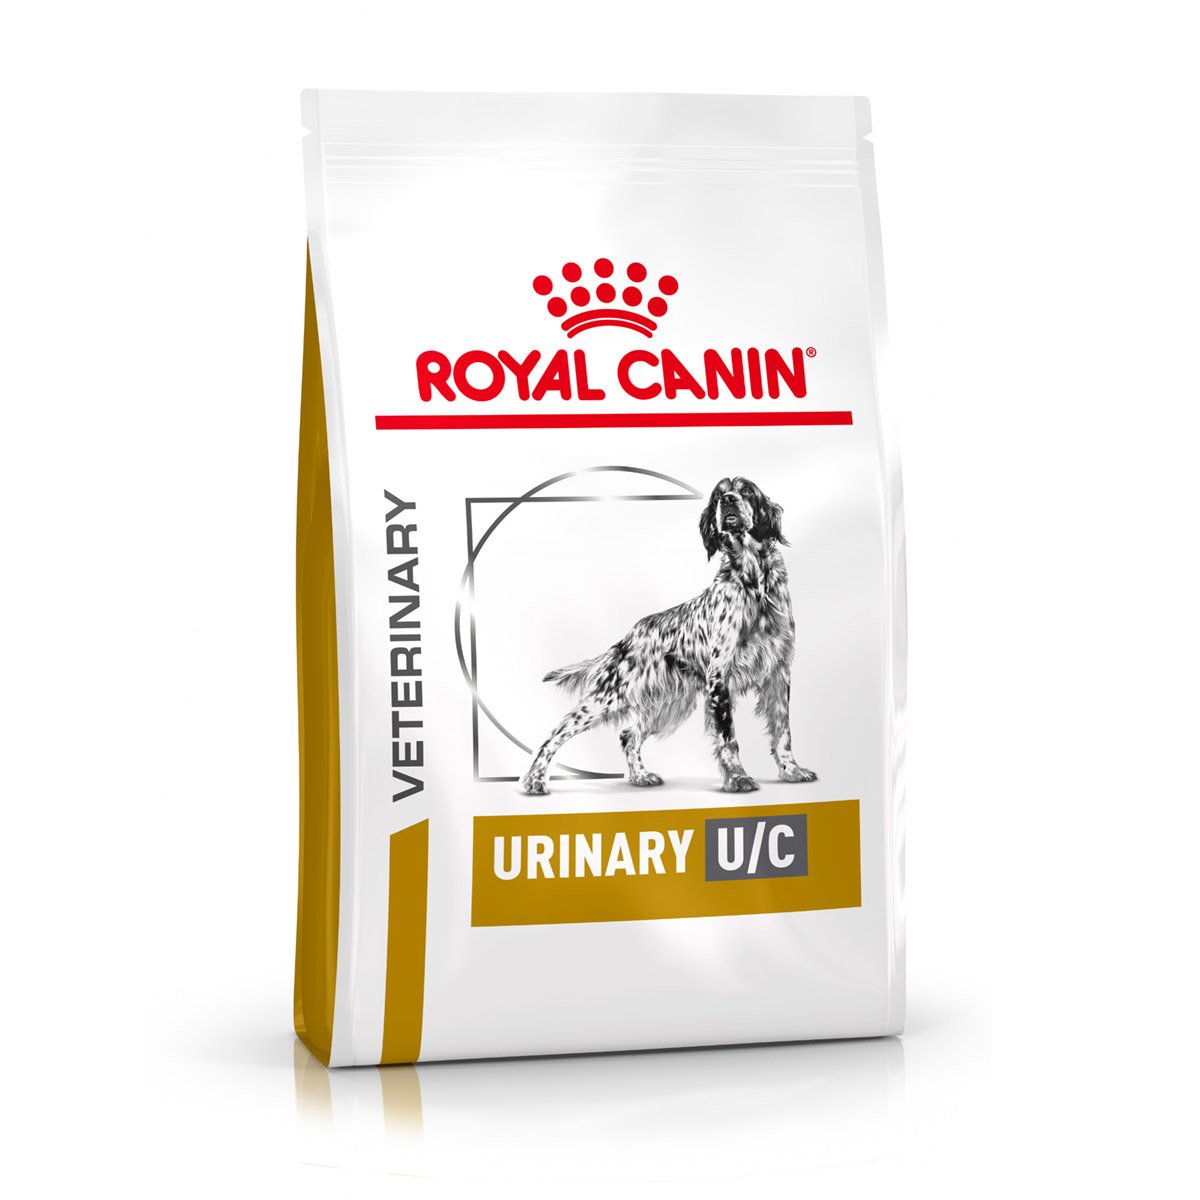 ROYAL CANIN® Veterinary URINARY U/C Trockenfutter für Hunde 14kg von Royal Canin